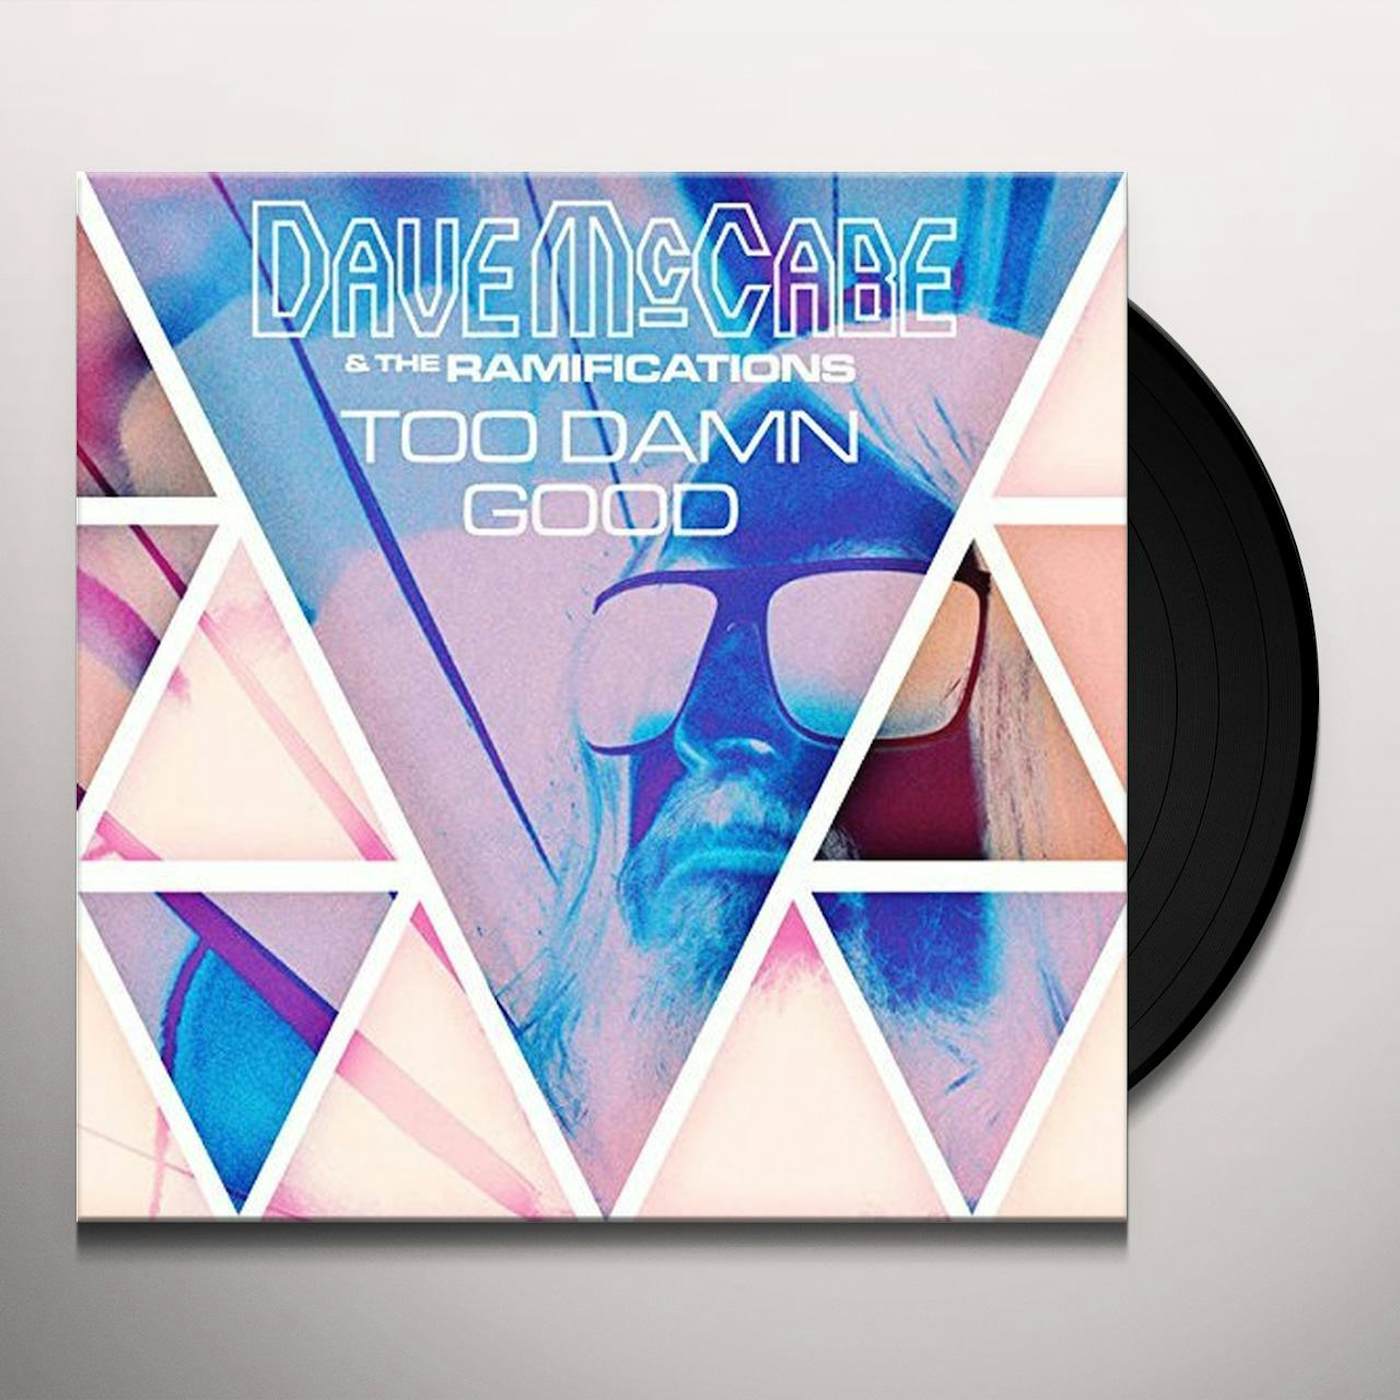 Dave McCabe & The Ramifications Too Damn Good Vinyl Record